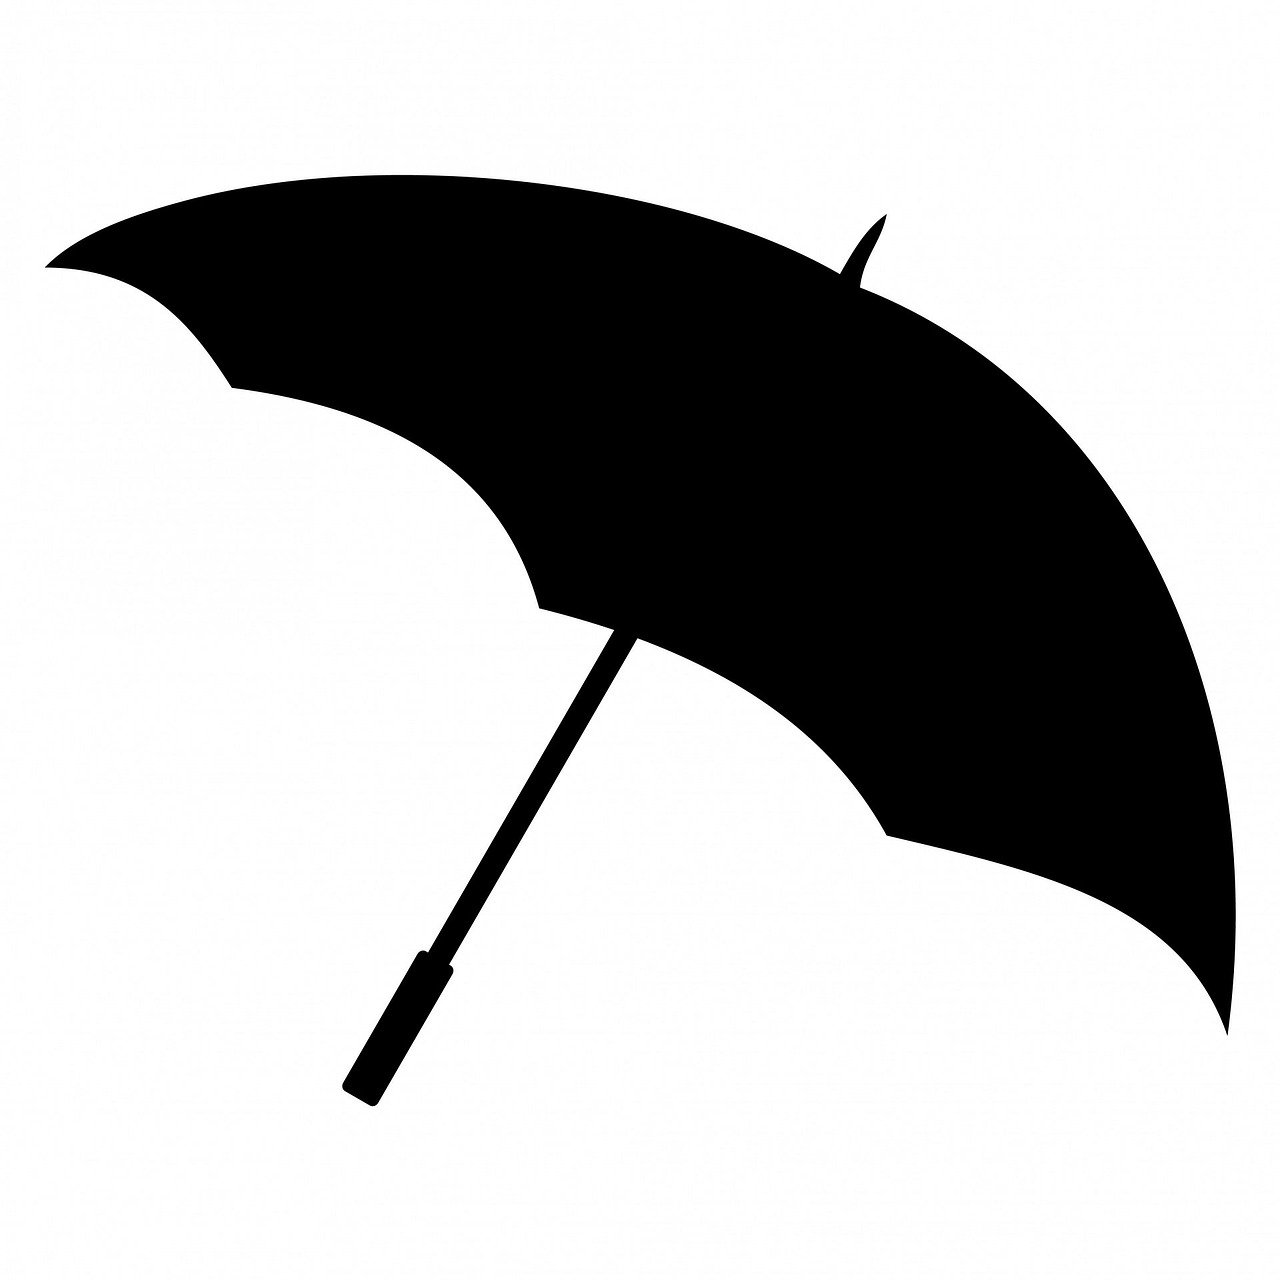 a black and white silhouette of an umbrella, vector art, pixabay, conceptual art, 1 0 2 4 x 7 6 8, left profile, vector. 8 k, black umbrella